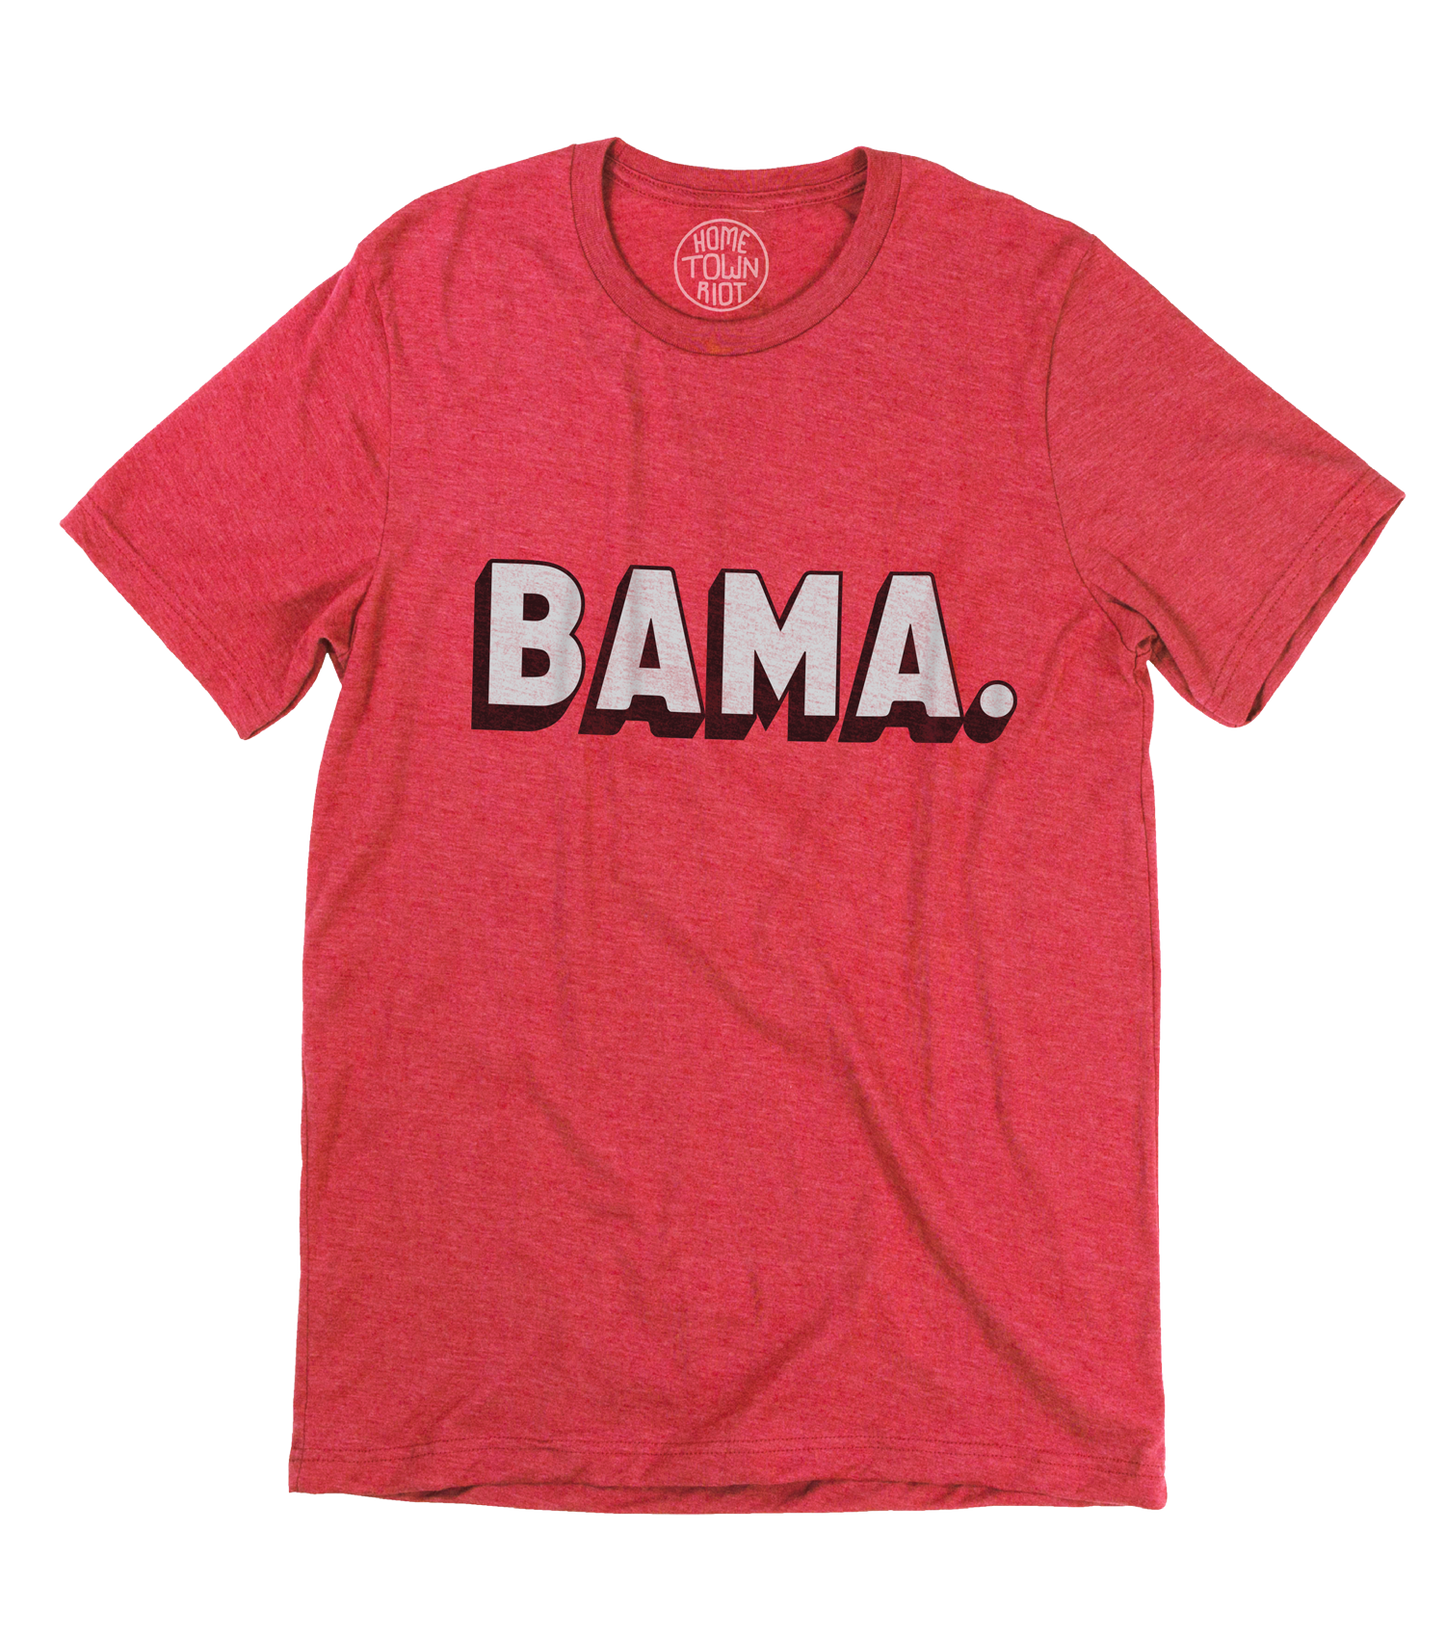 BAMA. Shirt